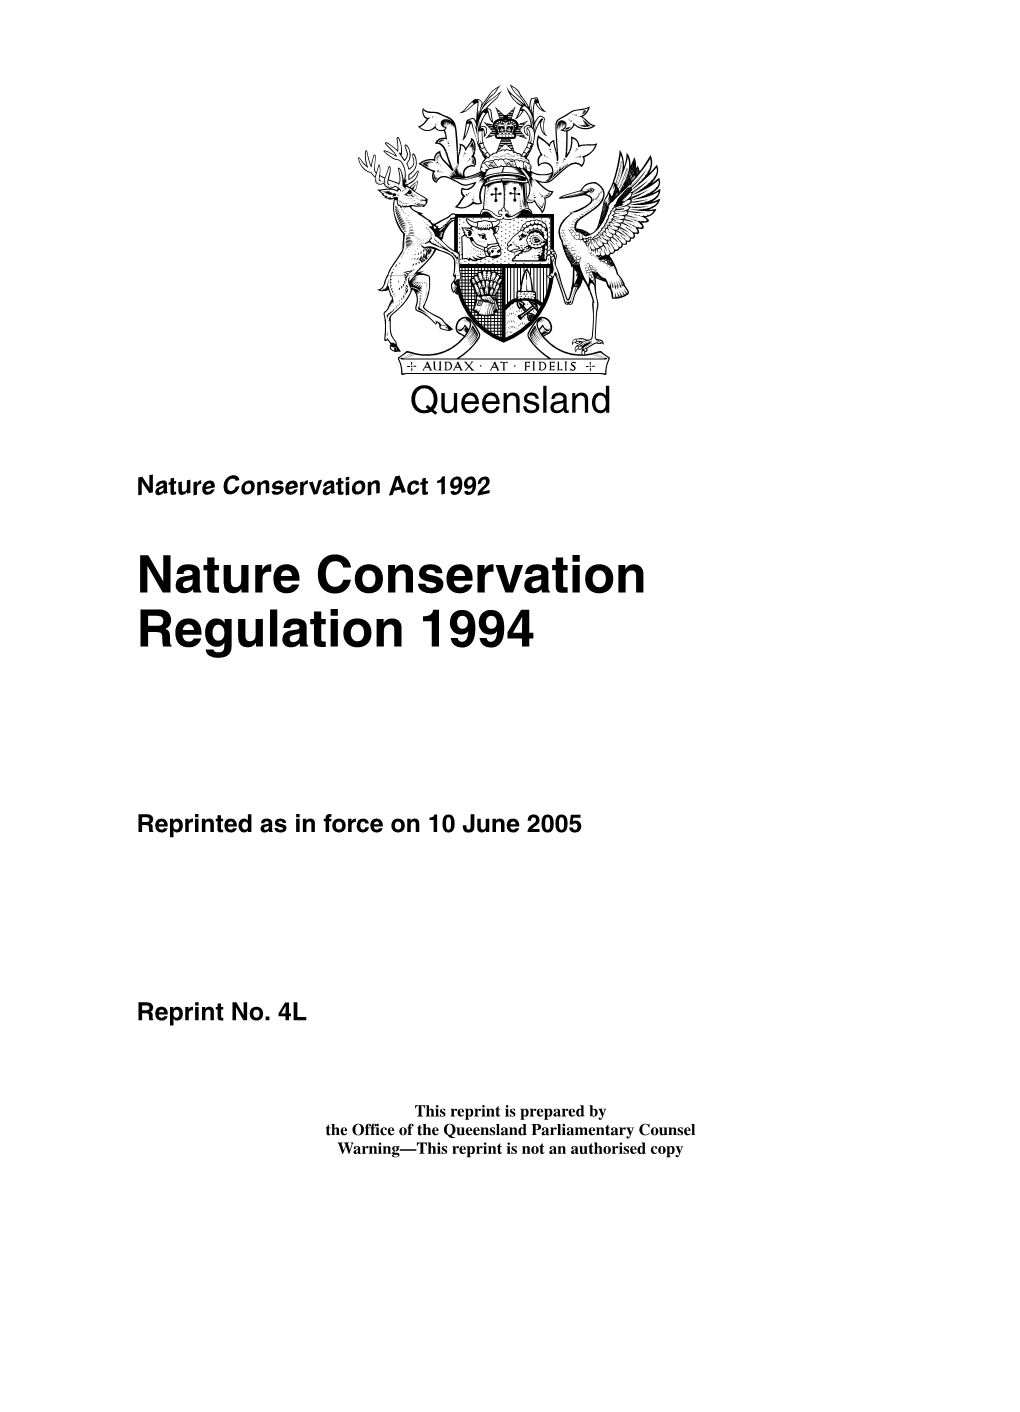 Nature Conservation Regulation 1994